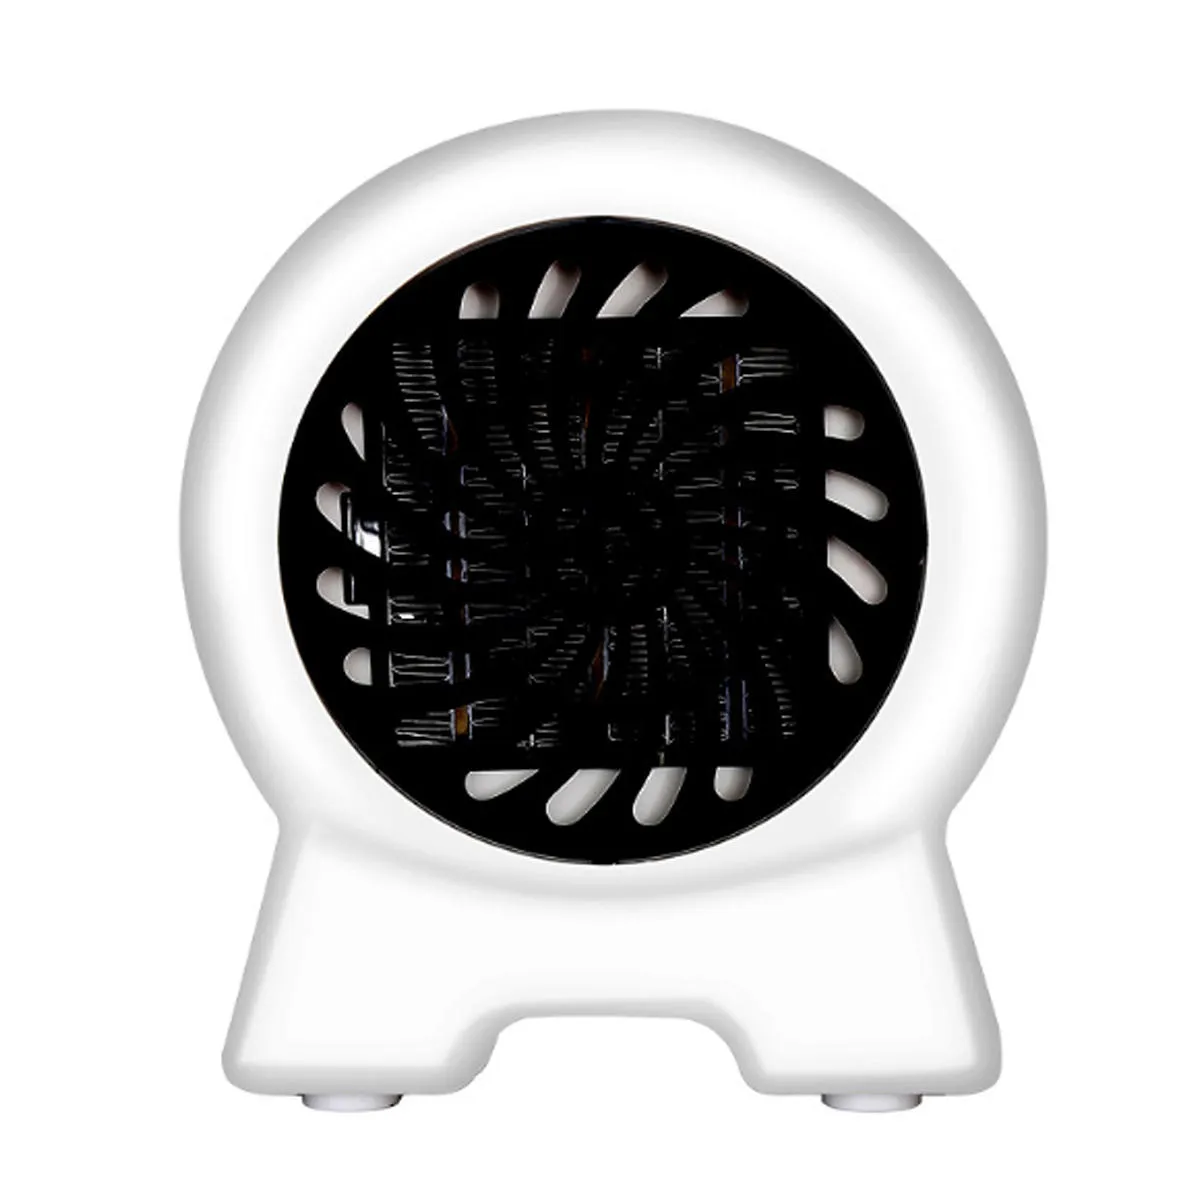 500W Mini Raum Heizlüfter tragbare elektrische Wandsteckdose Beheizte Fan Furnace Warmer - Weiß